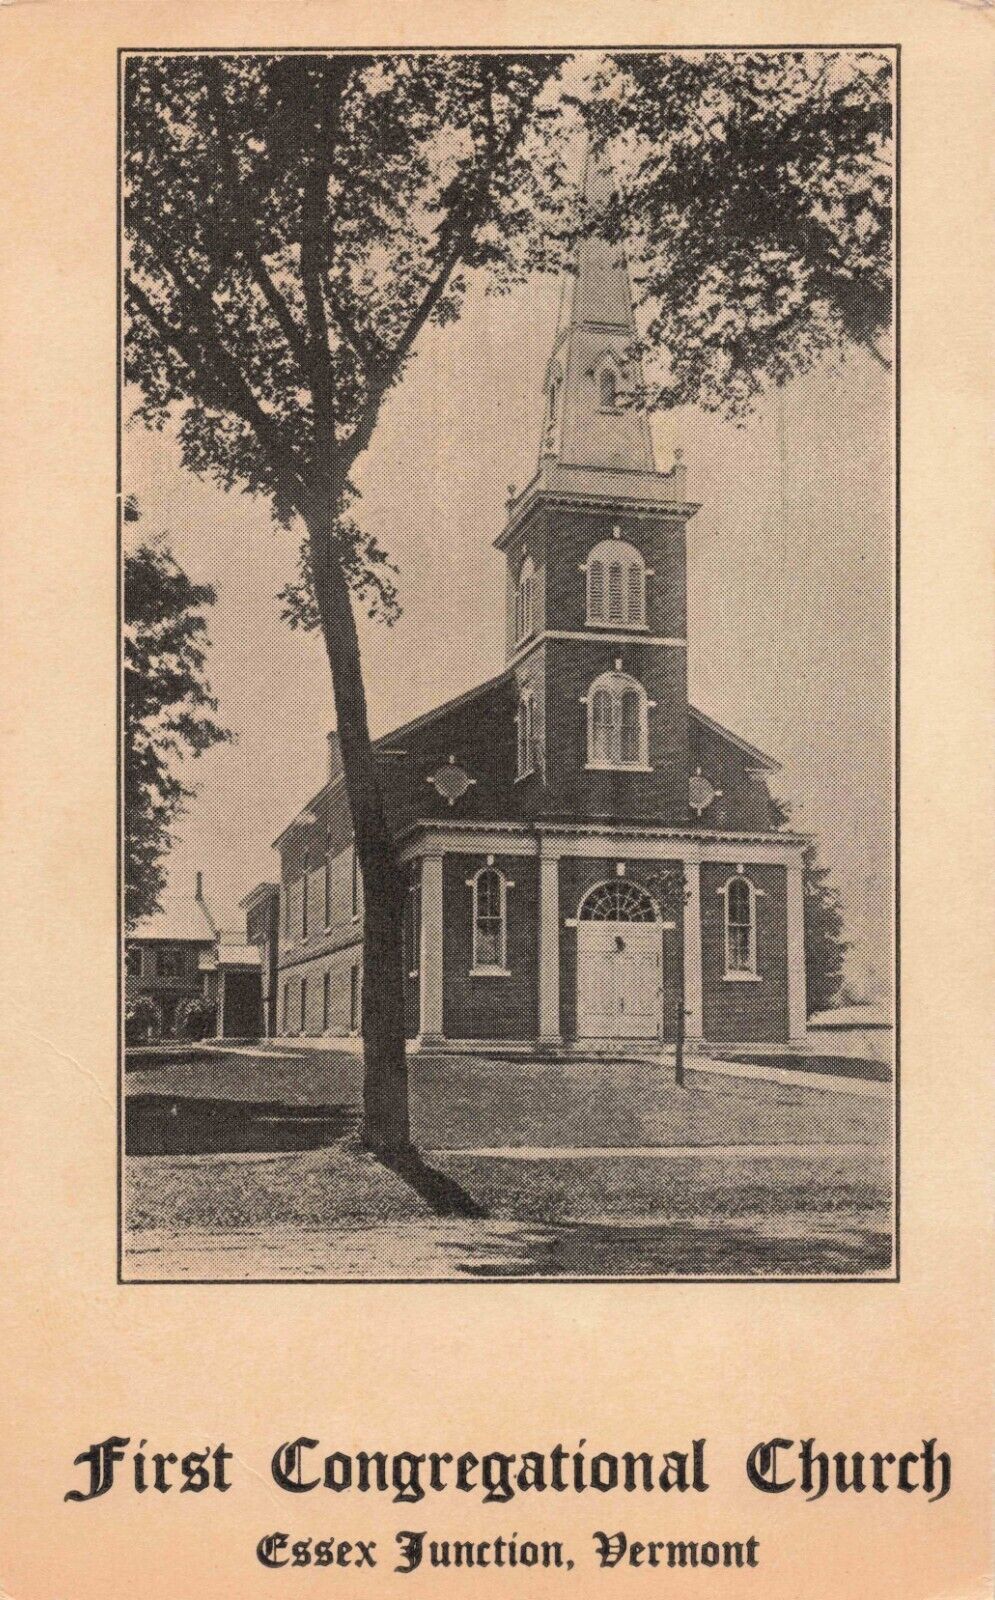 Congregational Church Essex Junction Vermont VT Bulletin c1940s?